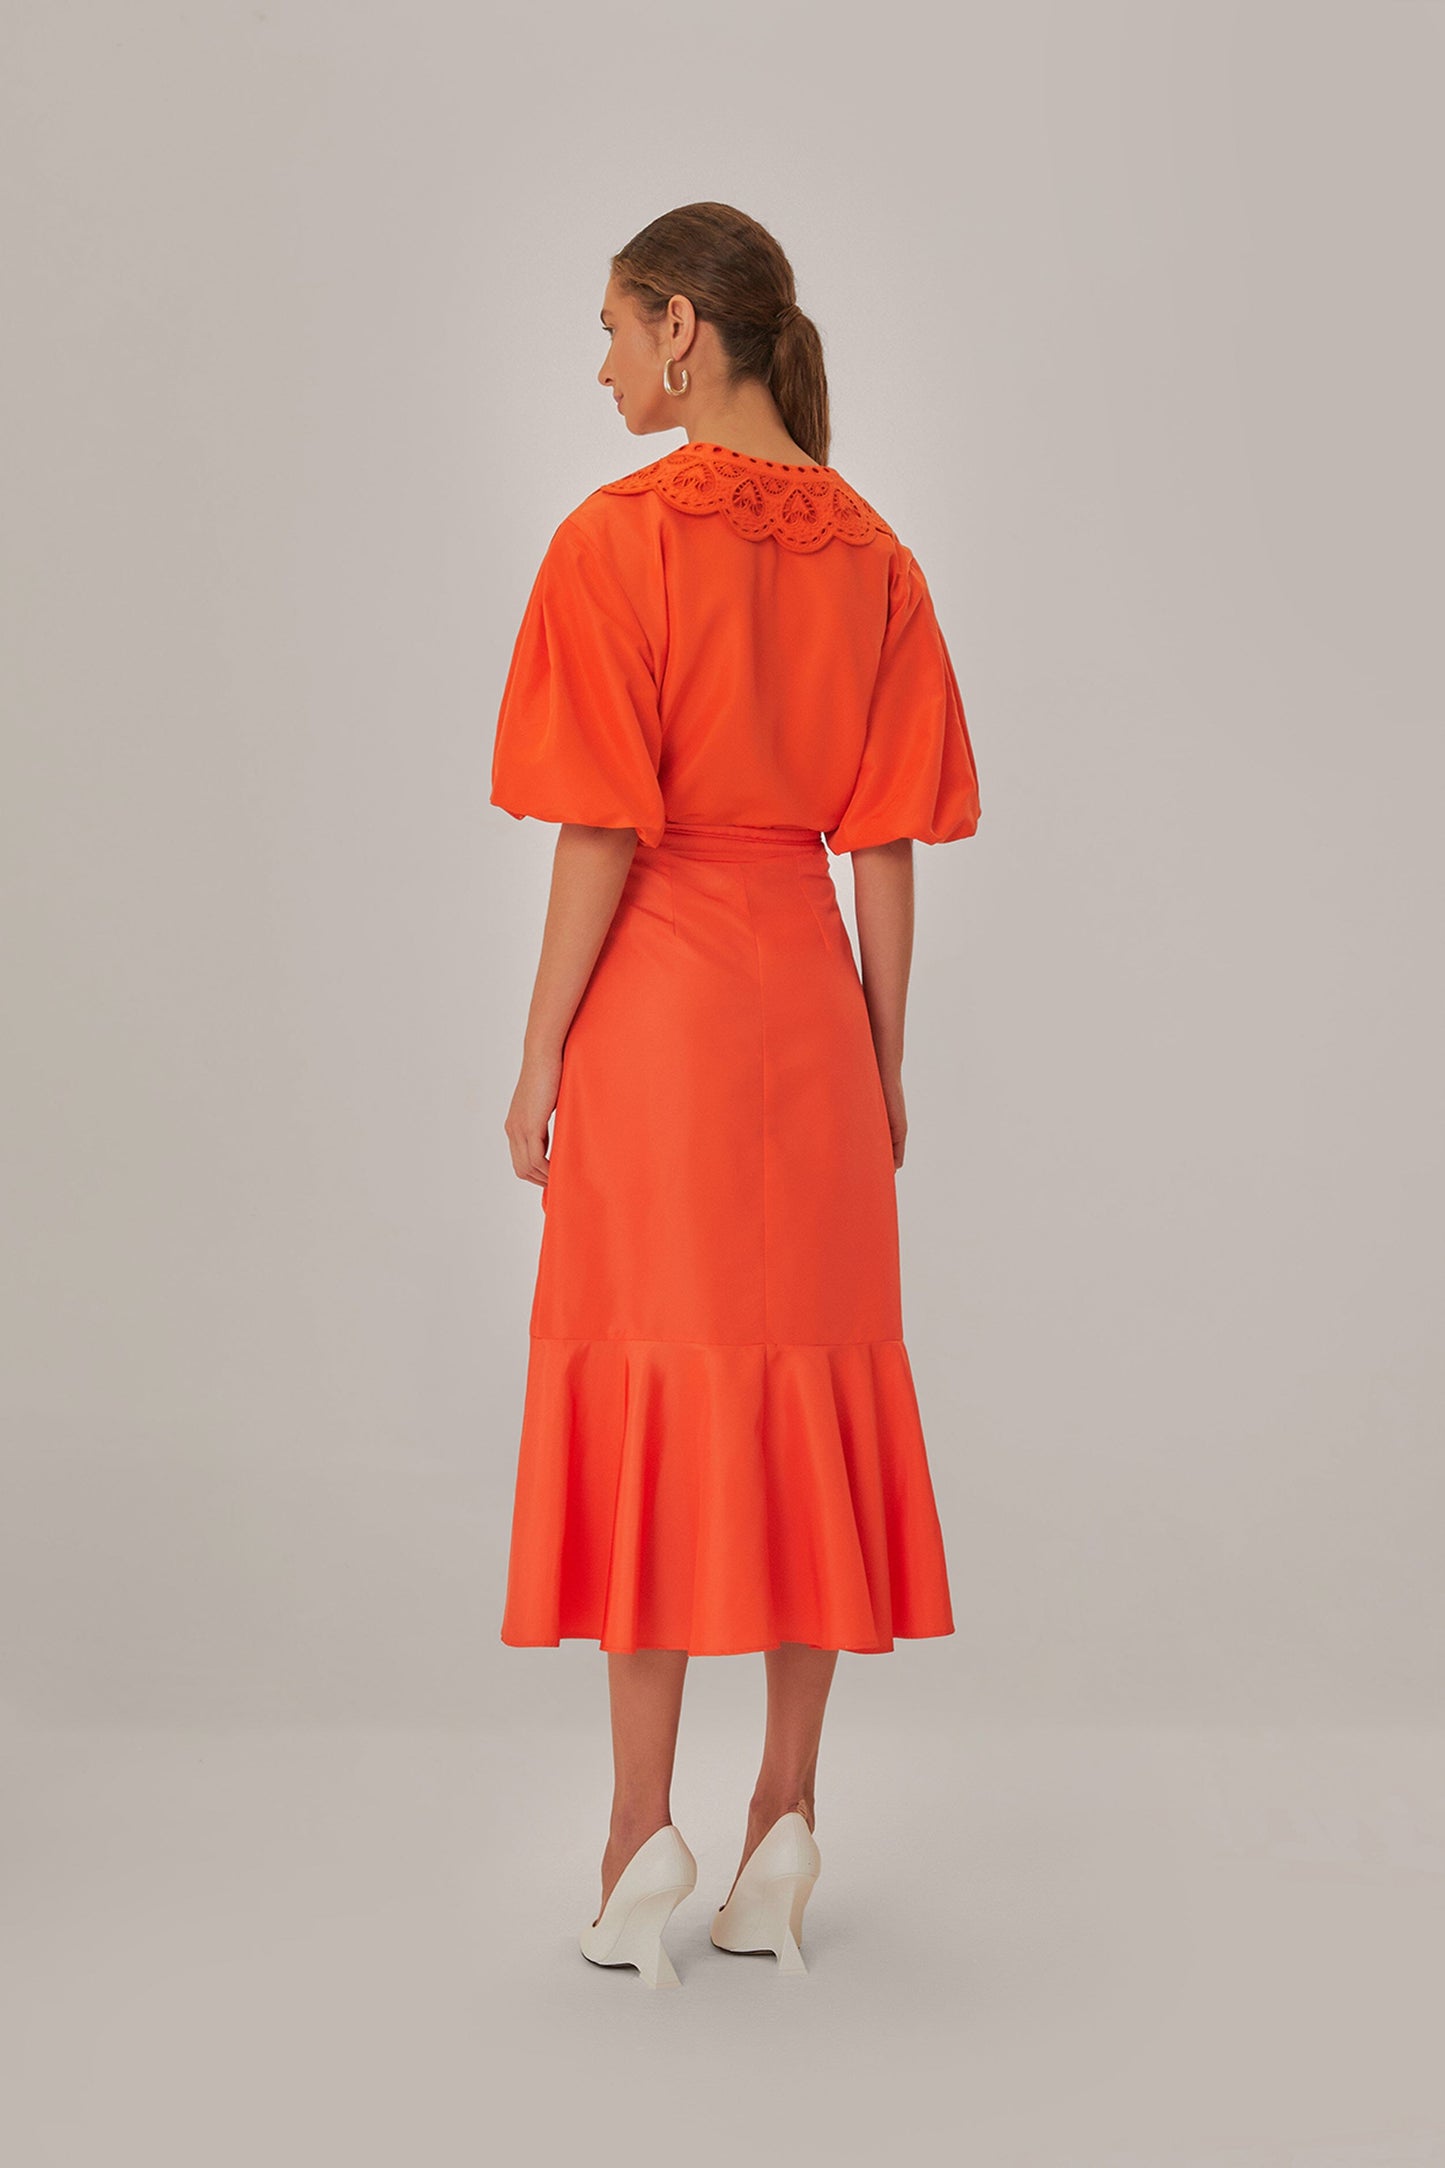 Vivid Orange Midi Skirt